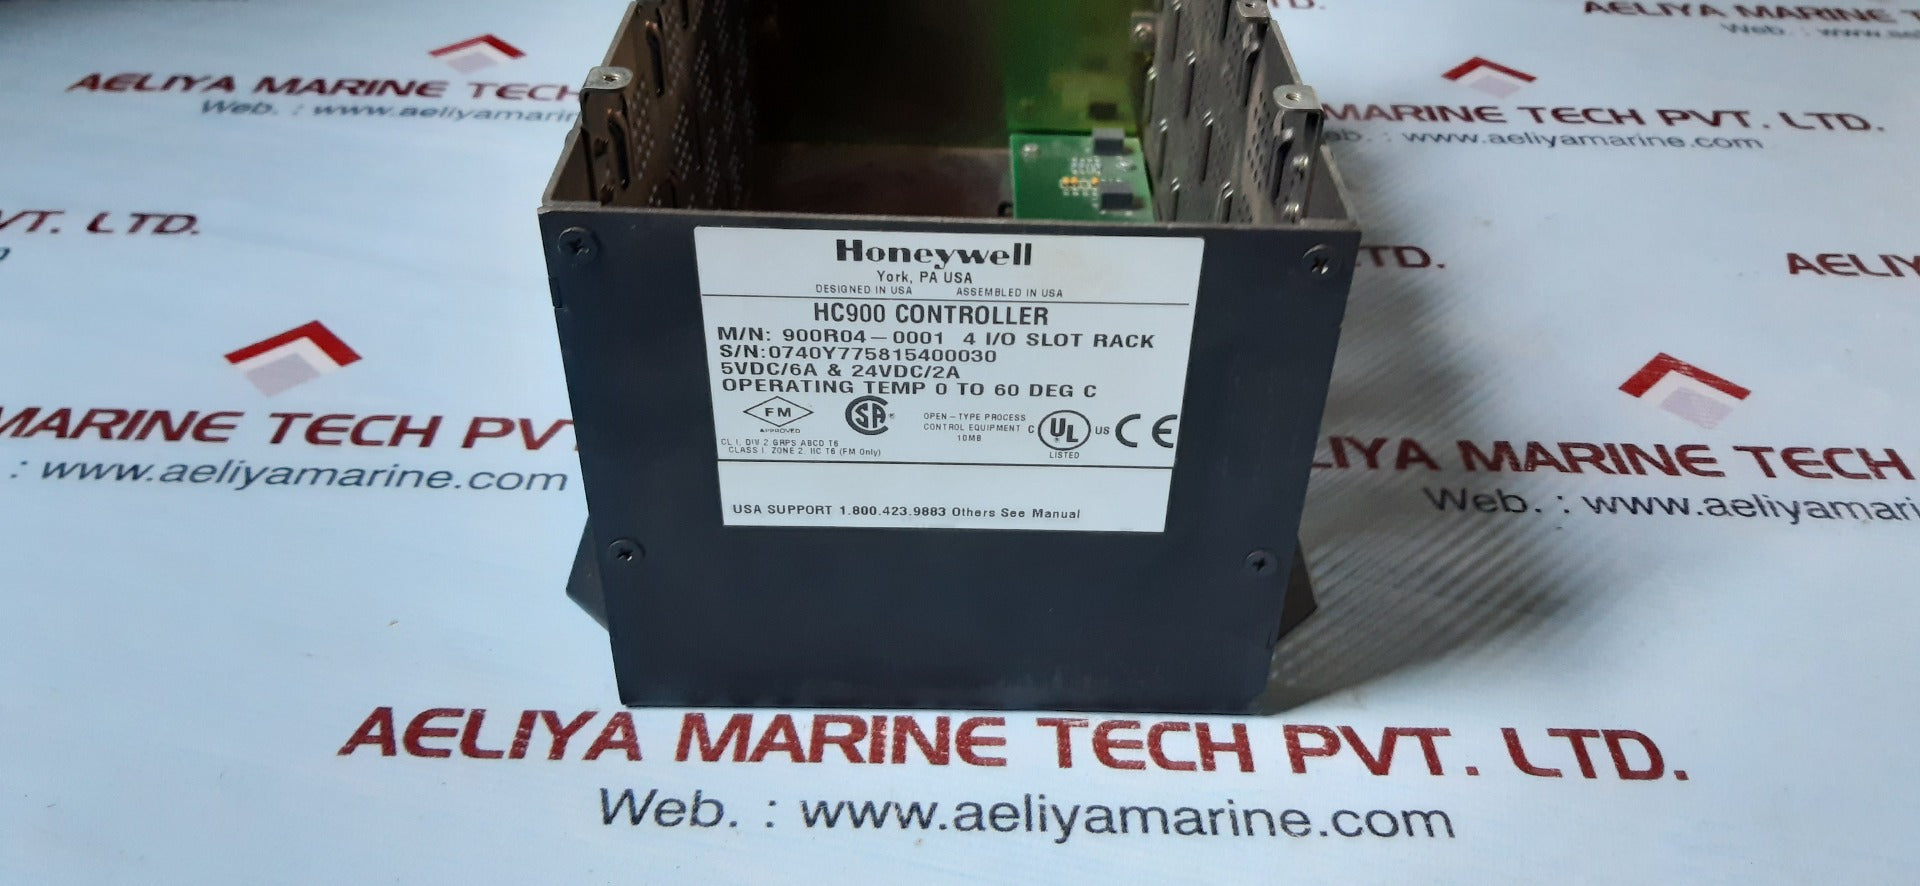 Honeywell hc900 controller 900r04-0001 4 i/o slot rack